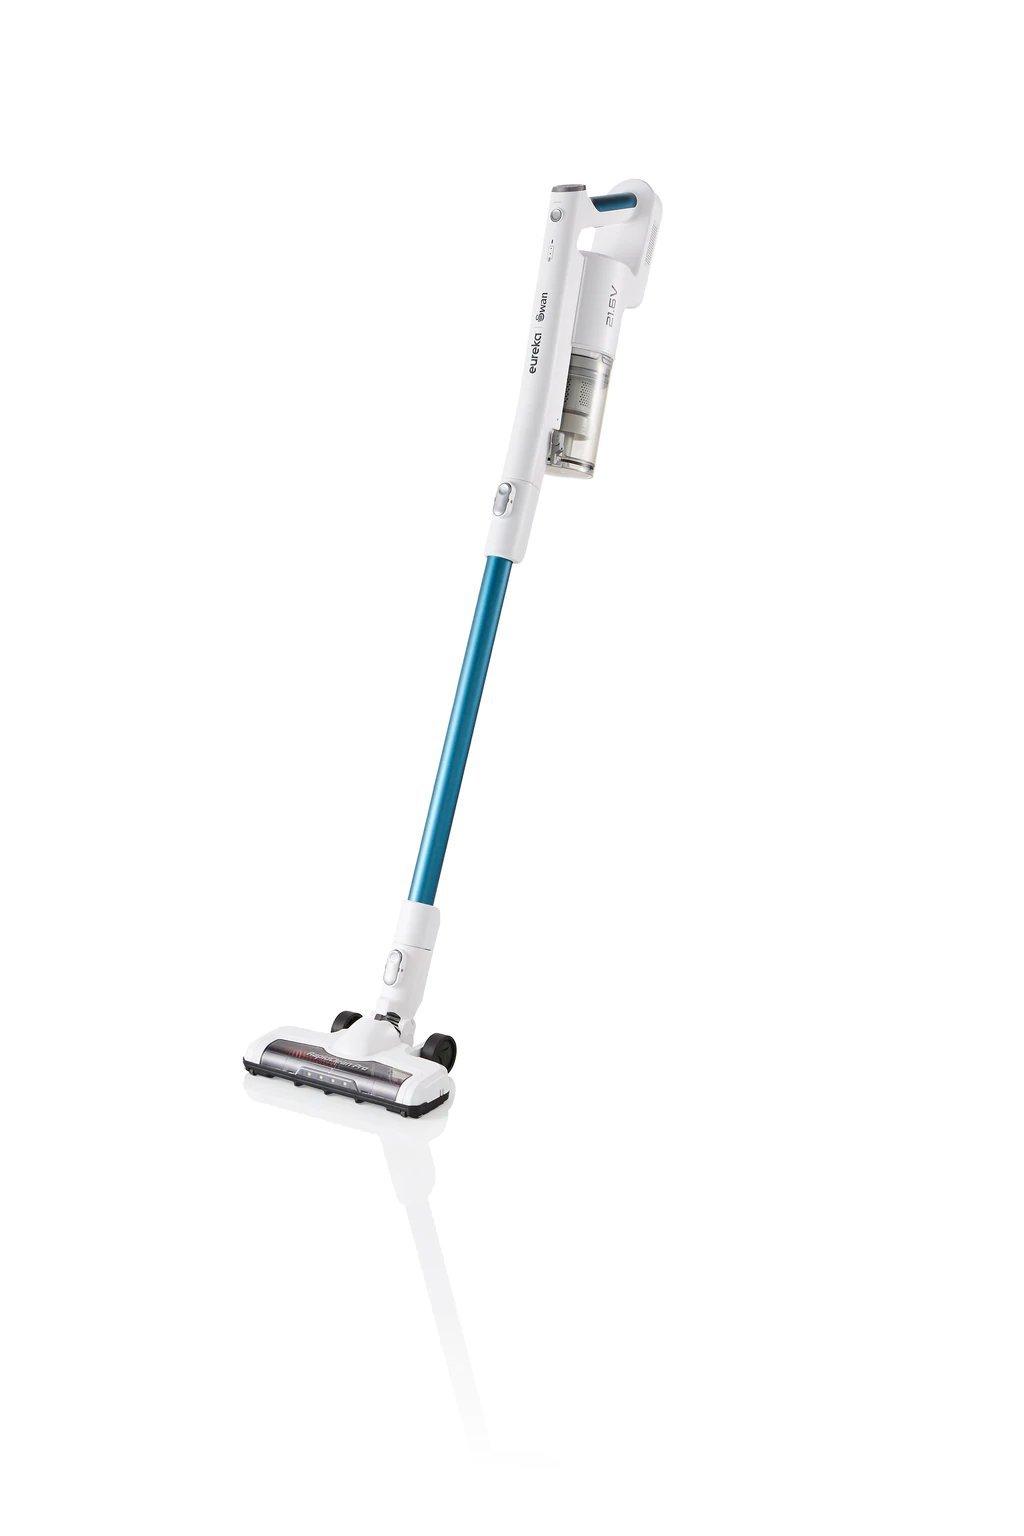 RapidClean Cordless Lightweight Vacuum Cleaner